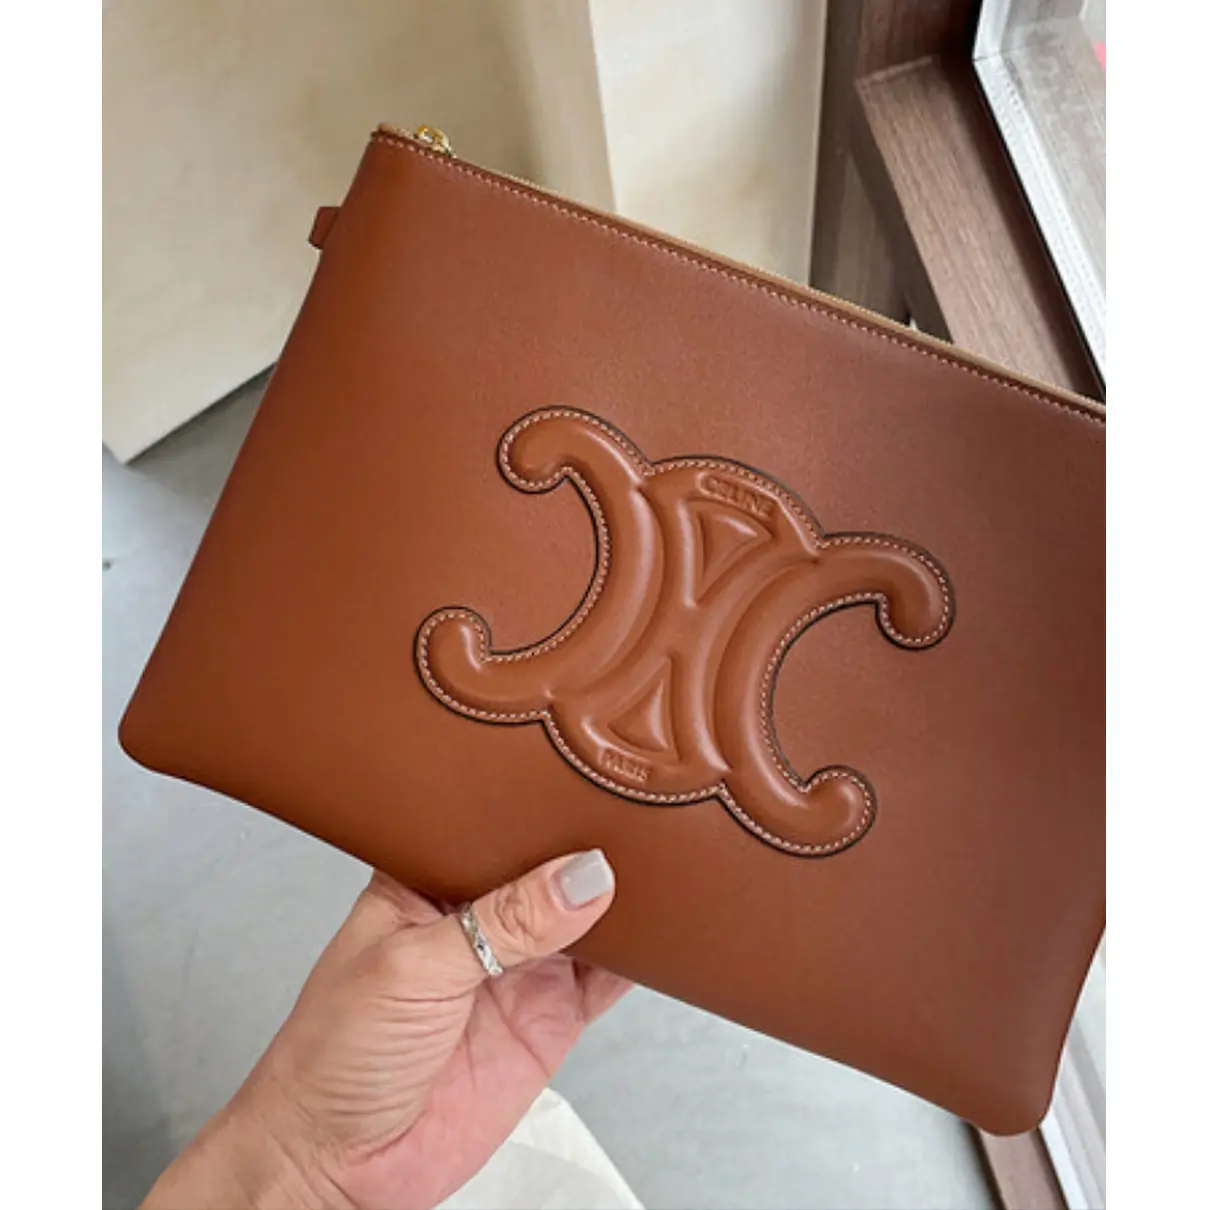 Buy Celine Triomphe leather clutch bag online